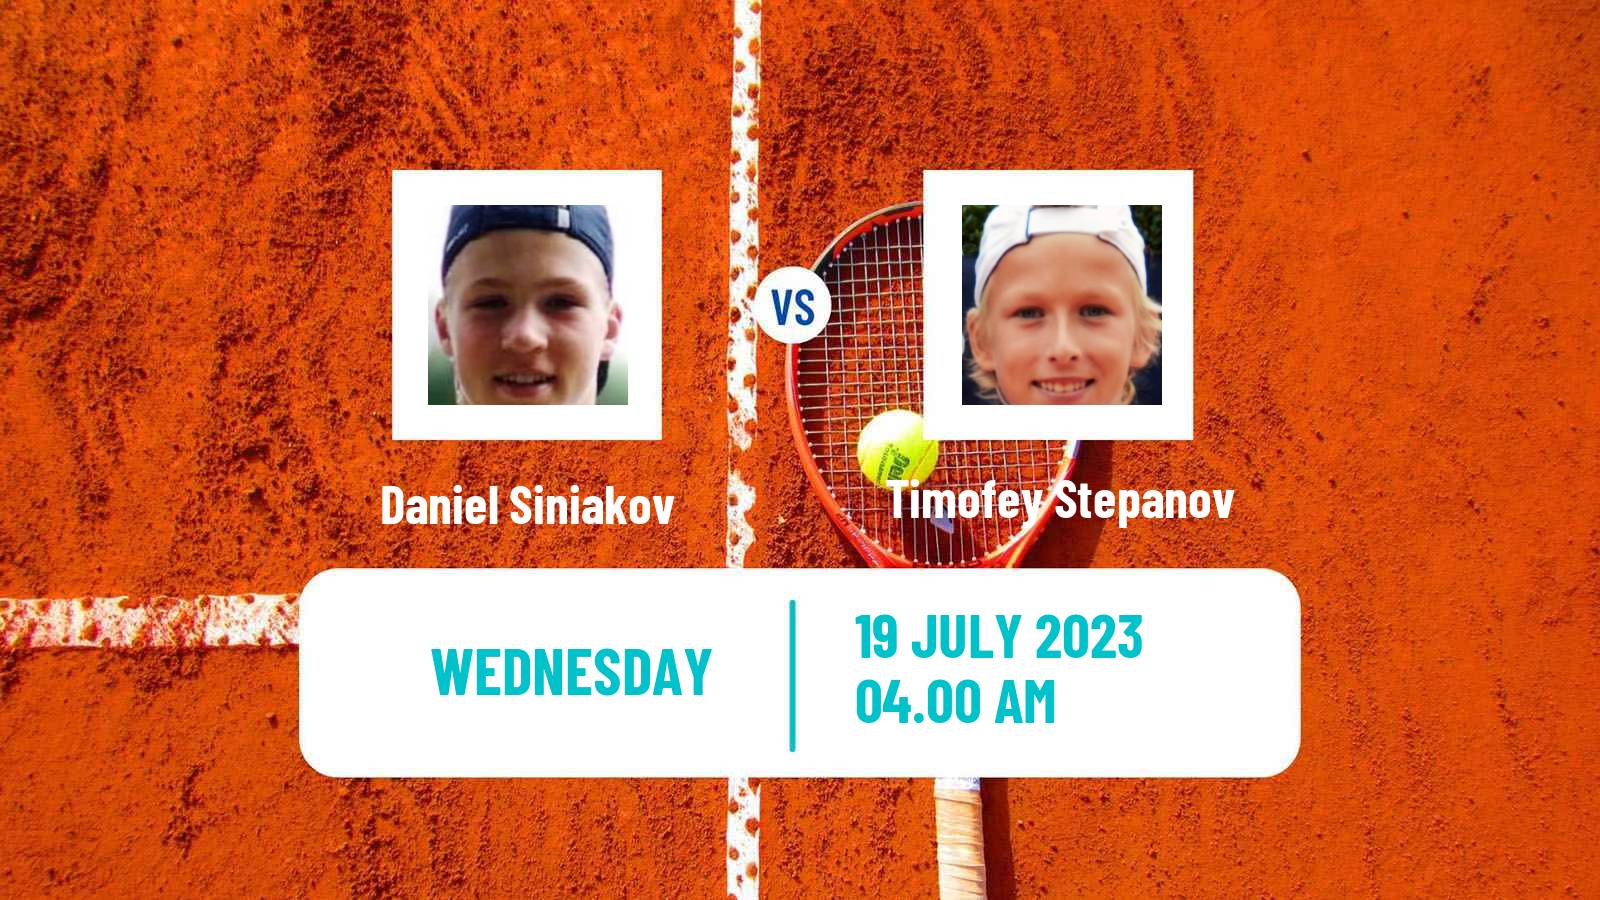 Tennis ITF M25 Telfs Men Daniel Siniakov - Timofey Stepanov